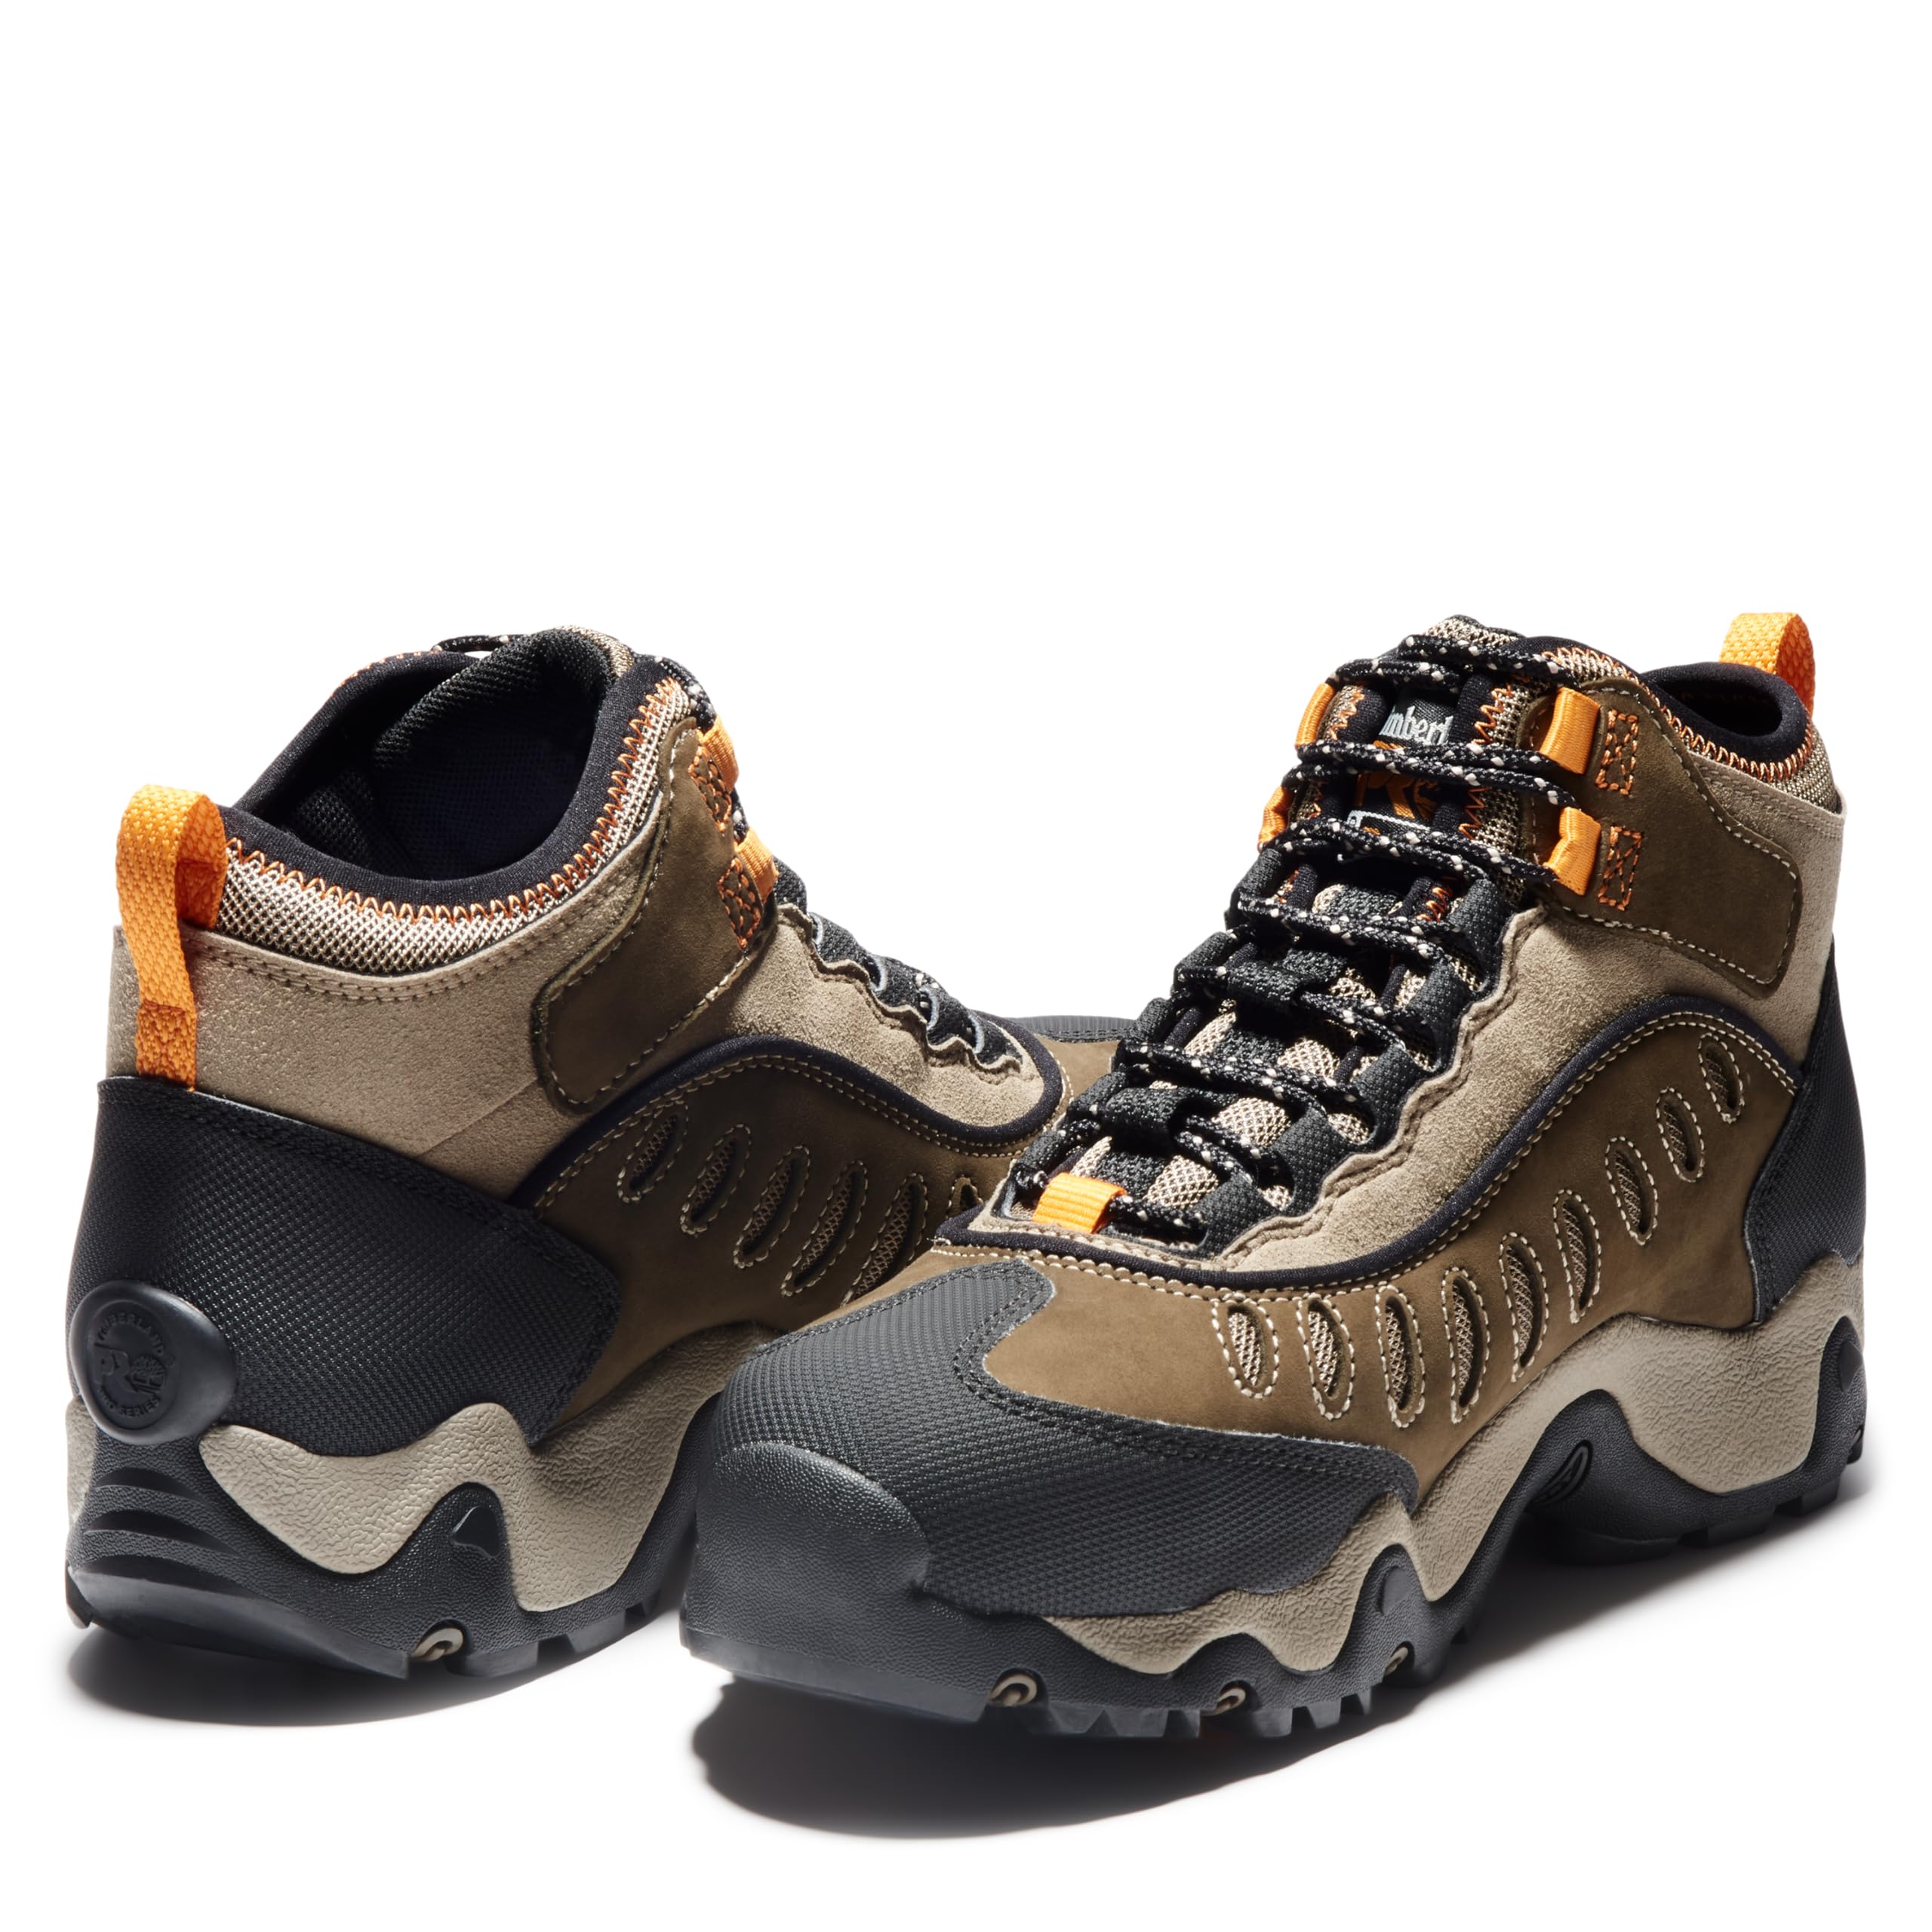 Timberland PRO Men's Mudslinger Steel Safety Toe Waterproof Industrial Hiker Work Boot